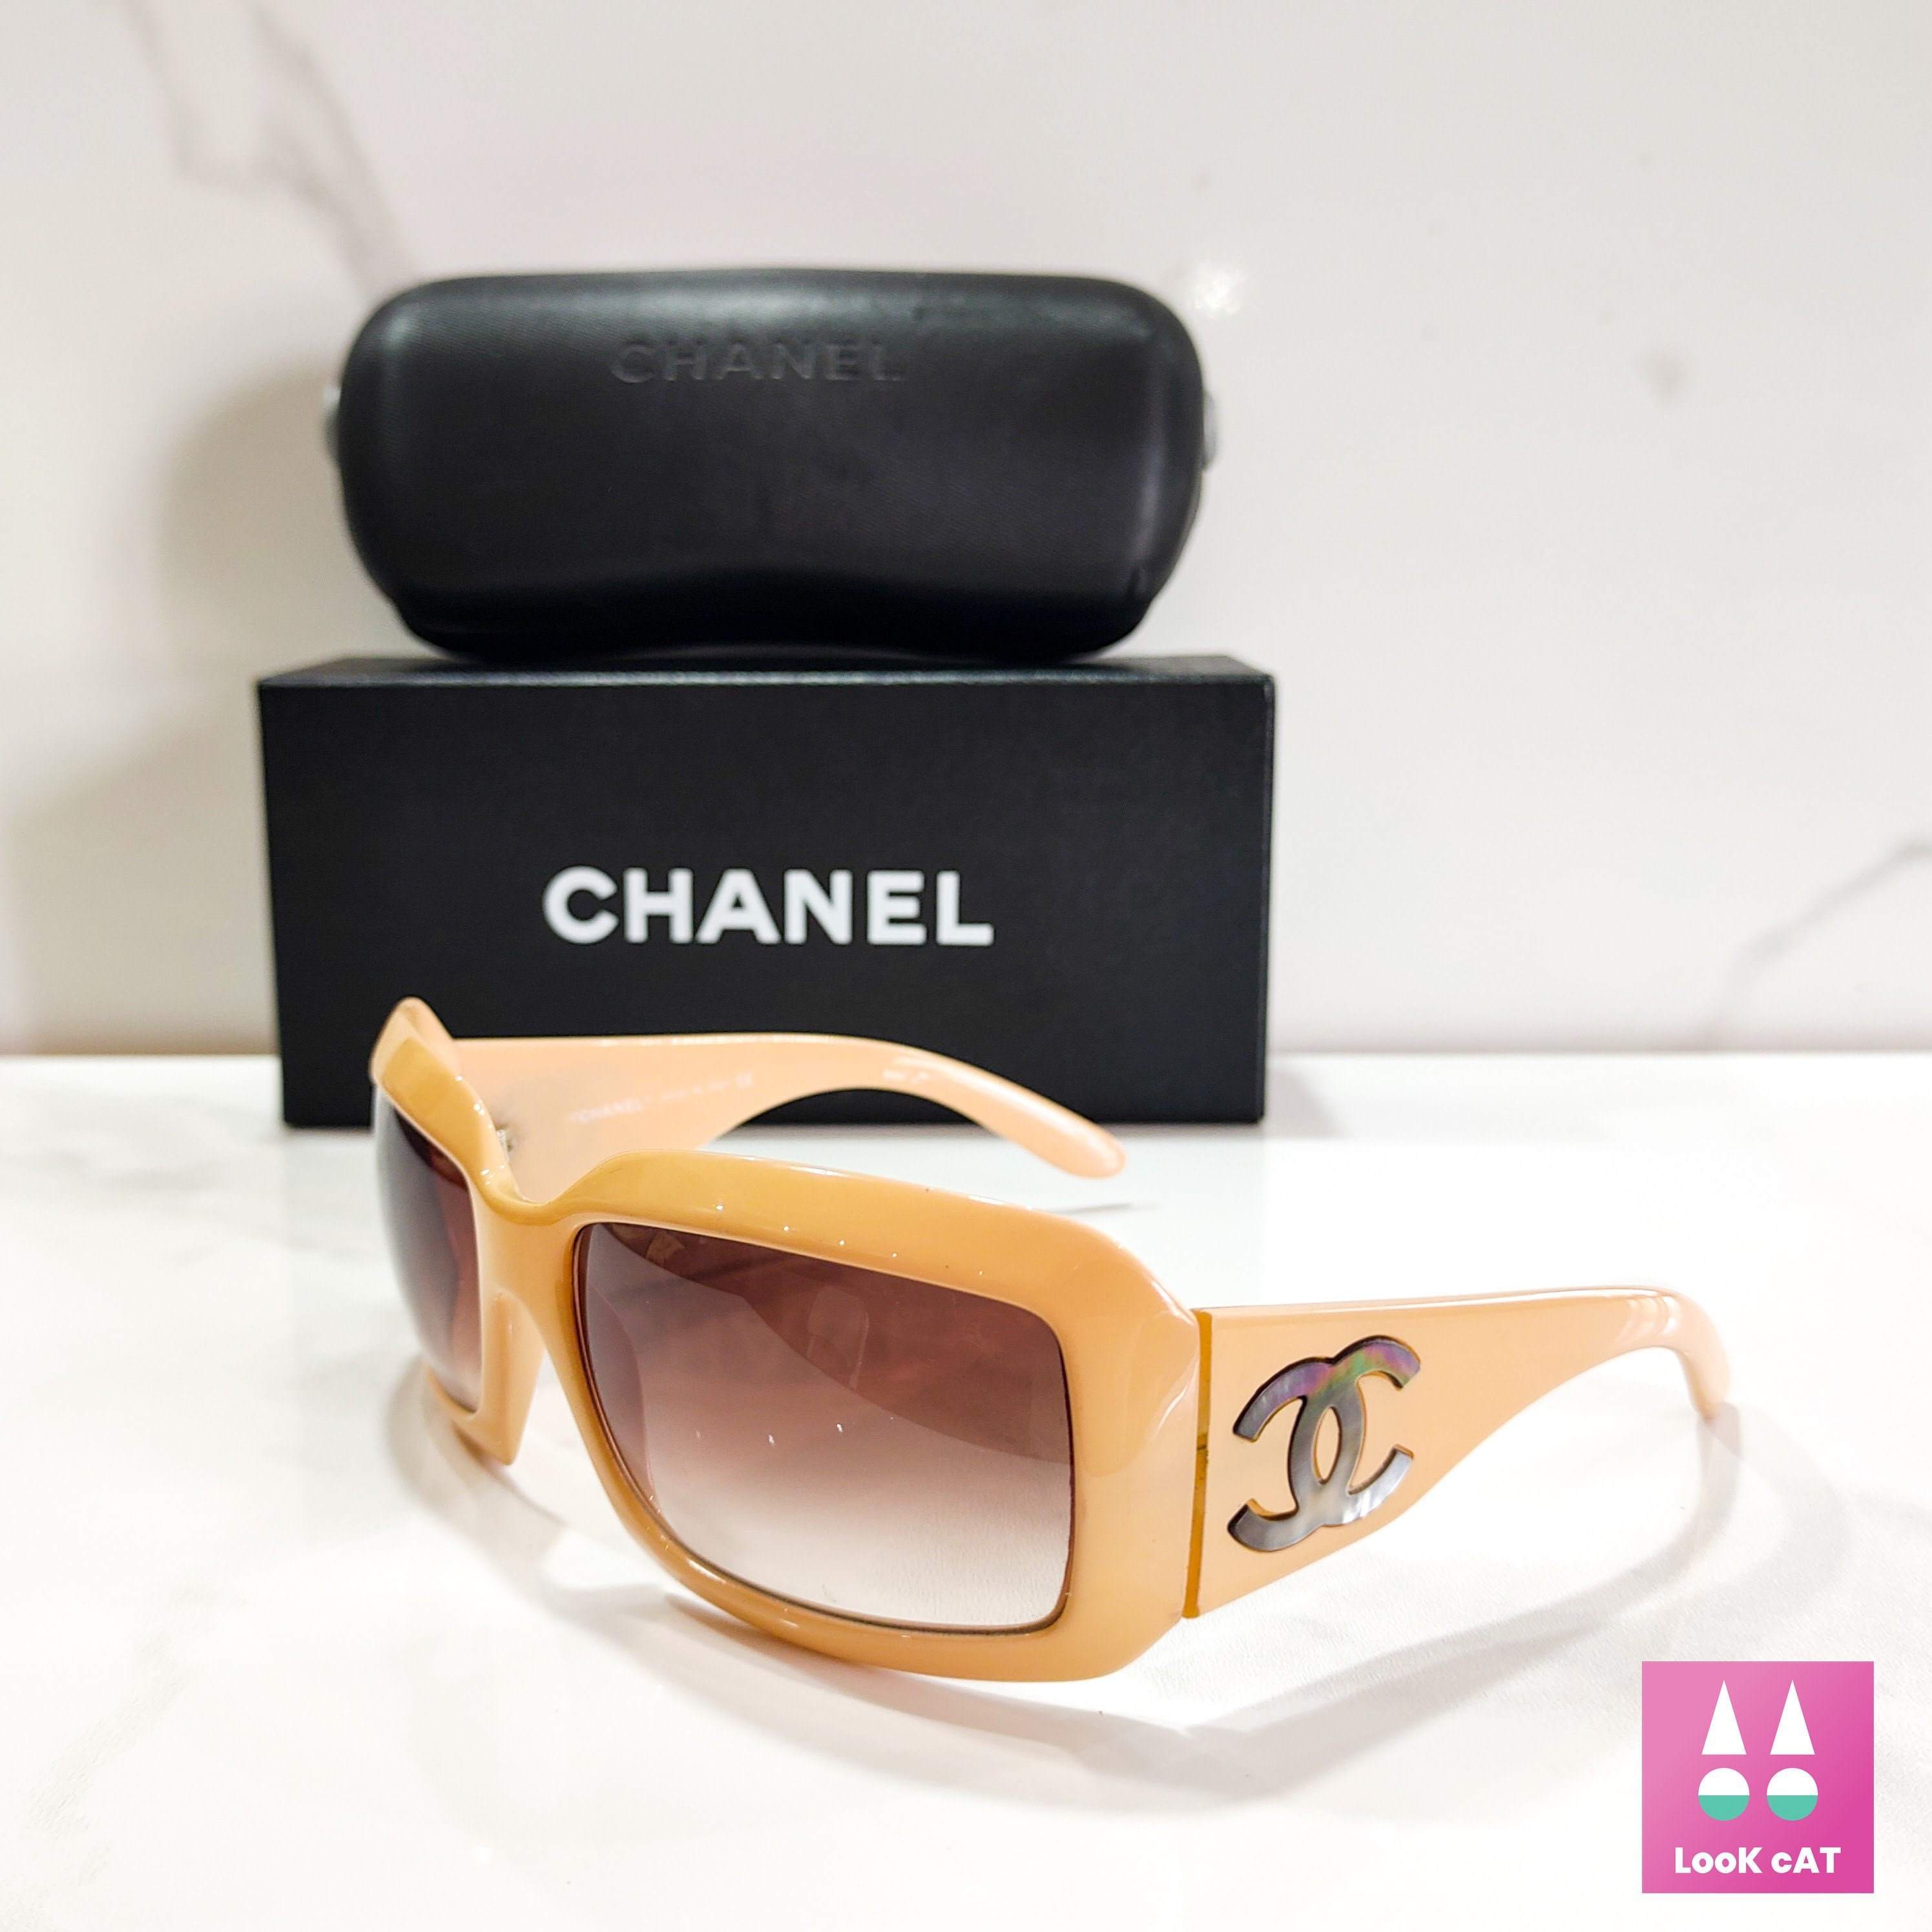 Rare Authentic Chanel 5012 c.501 Black Blue 51mm Vintage Sunglasses Italy